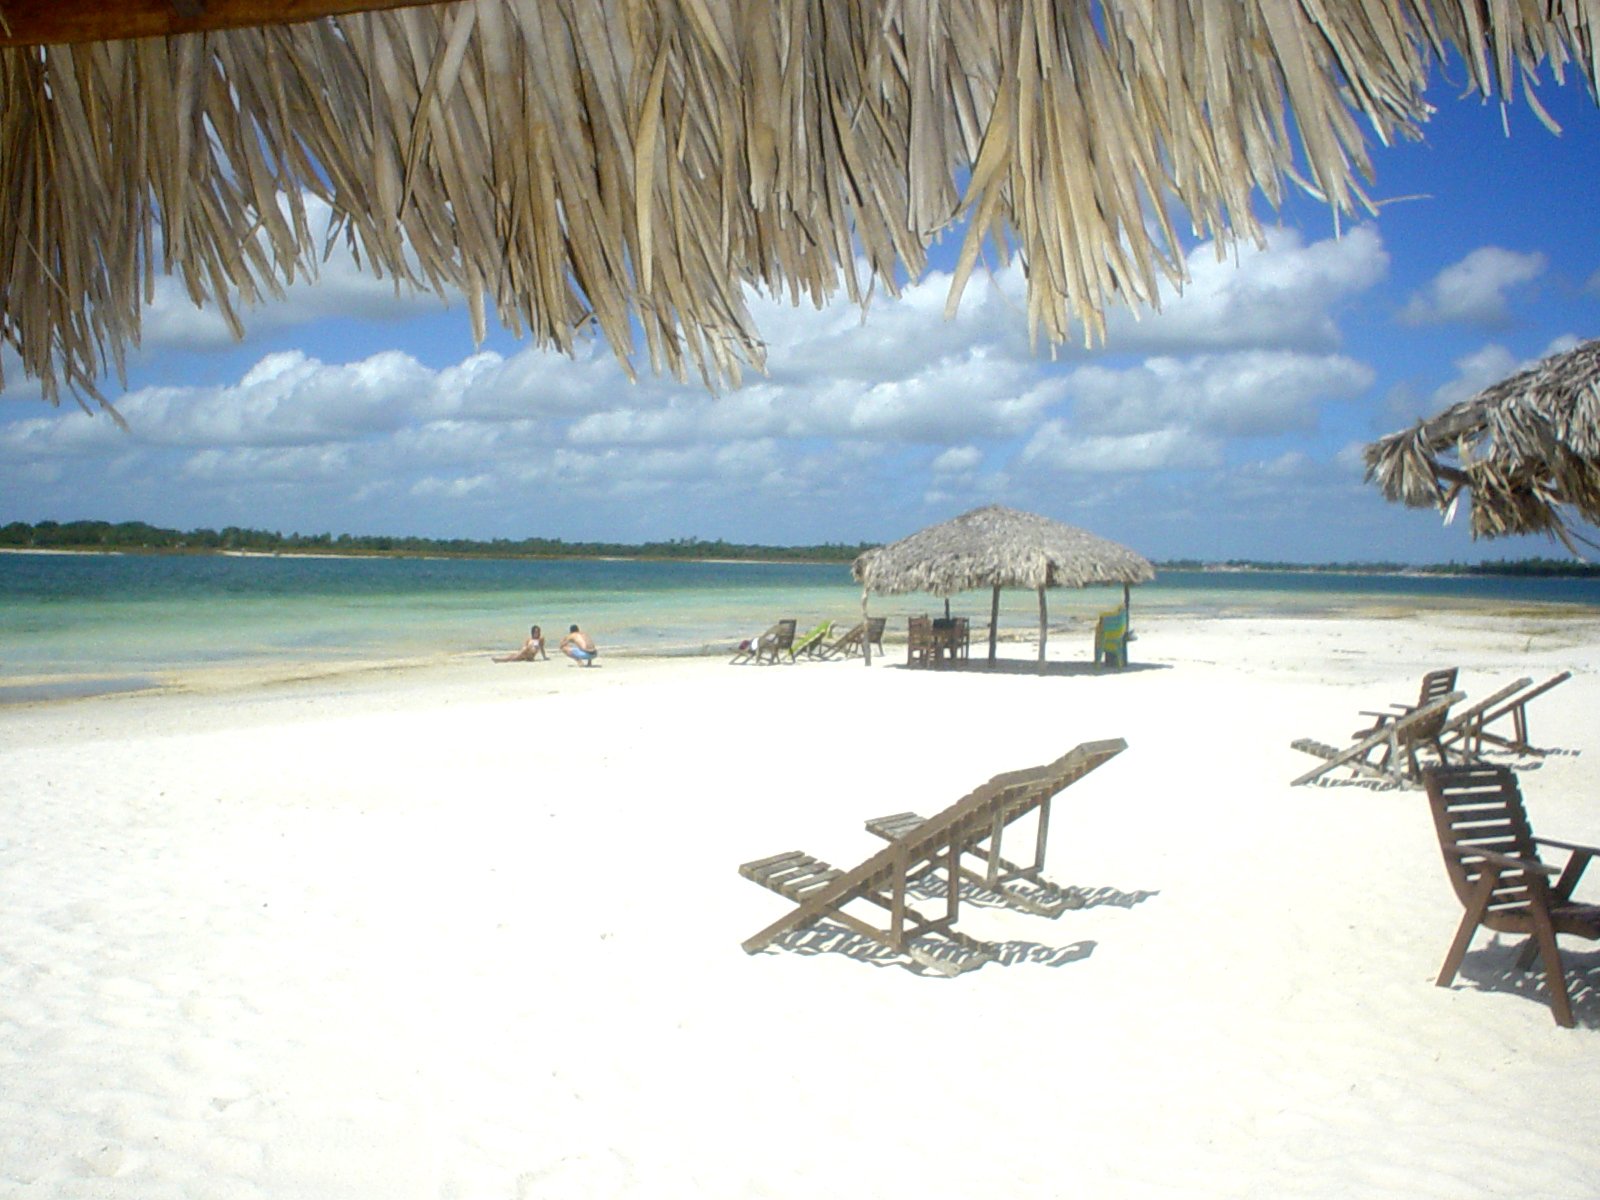 chairs and umbrellas on the sandy beach under straw umbrellas